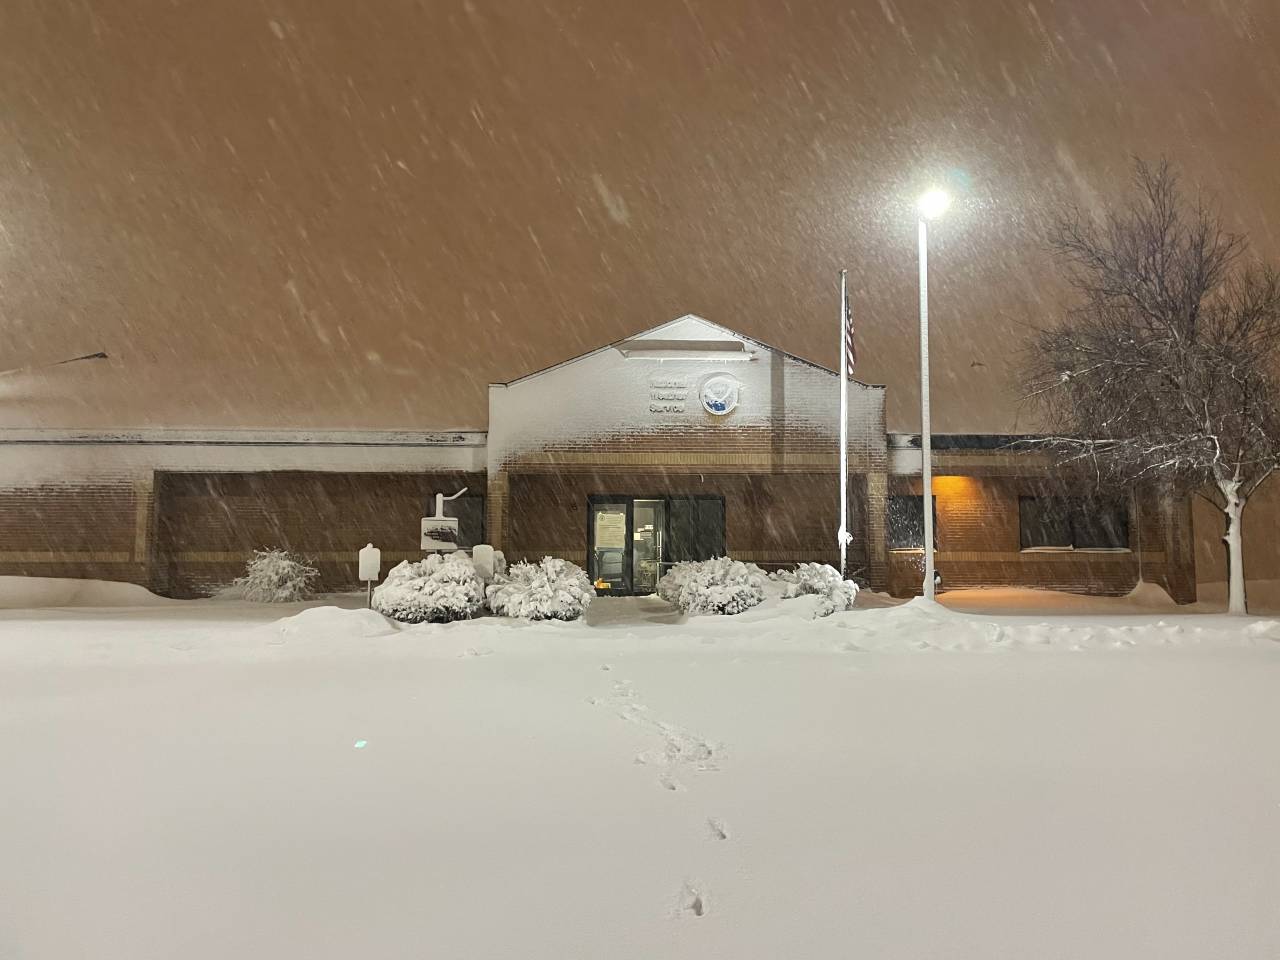 Cheyenne, Wyoming, domenica già alle prese con forti nevicate (Fonte: NWS Cheyenne via Twitter)